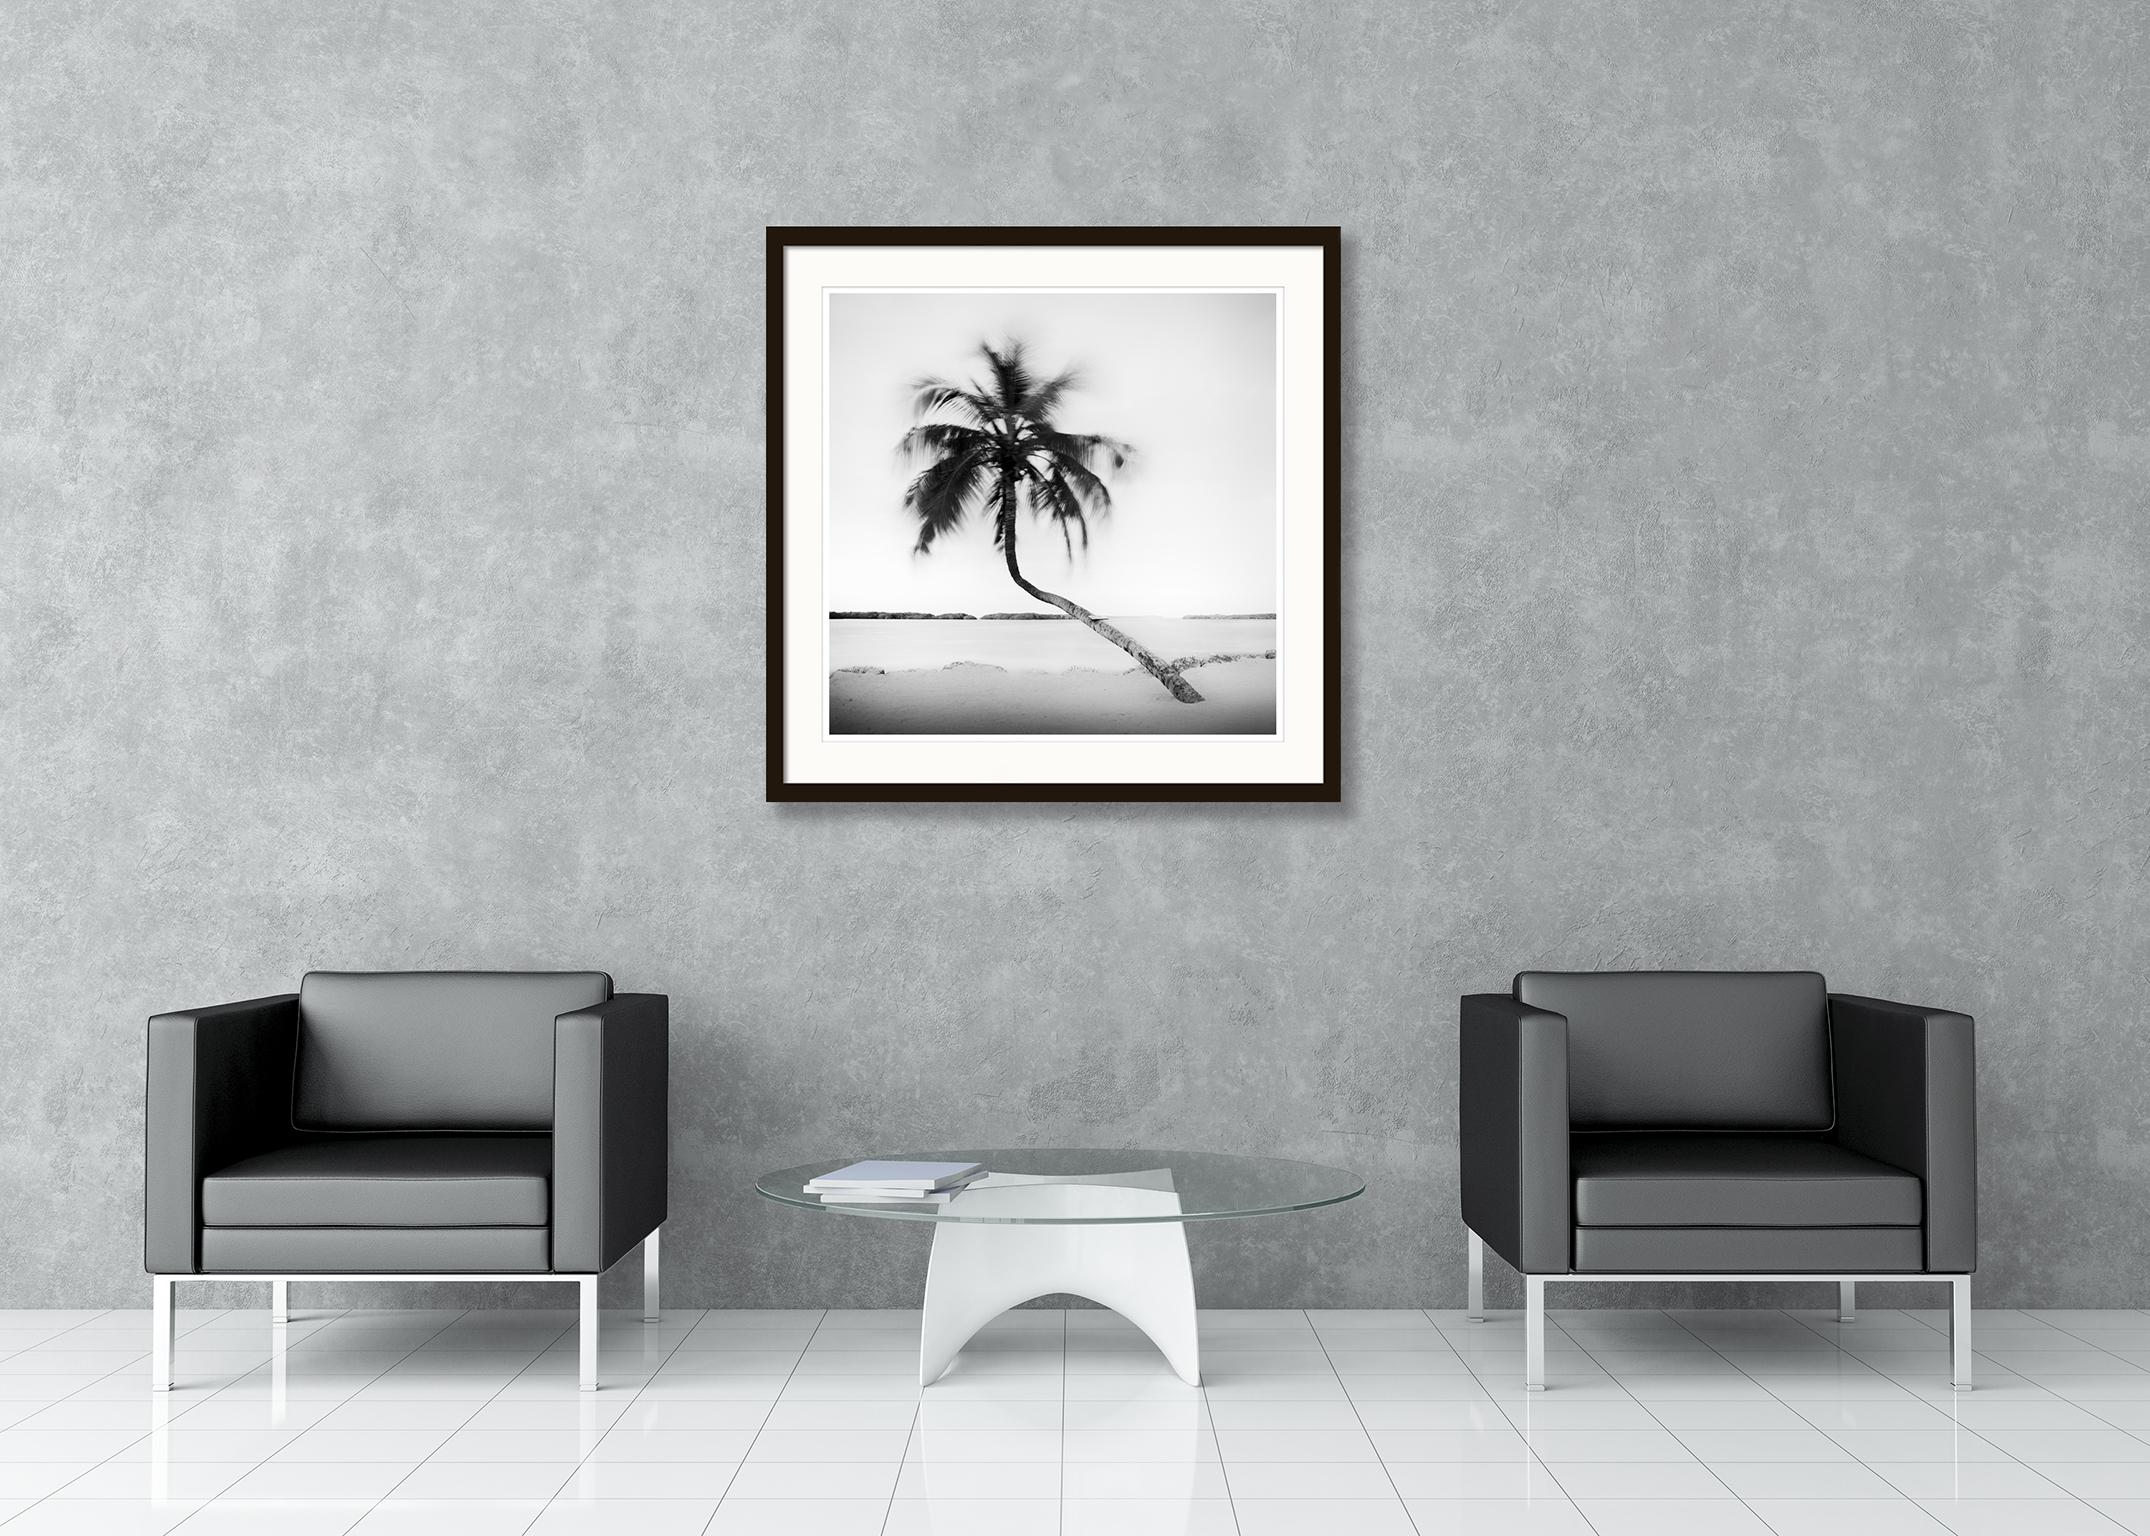 Bent Palm, Beach, Florida, USA, black and white fine art photography landscape 1